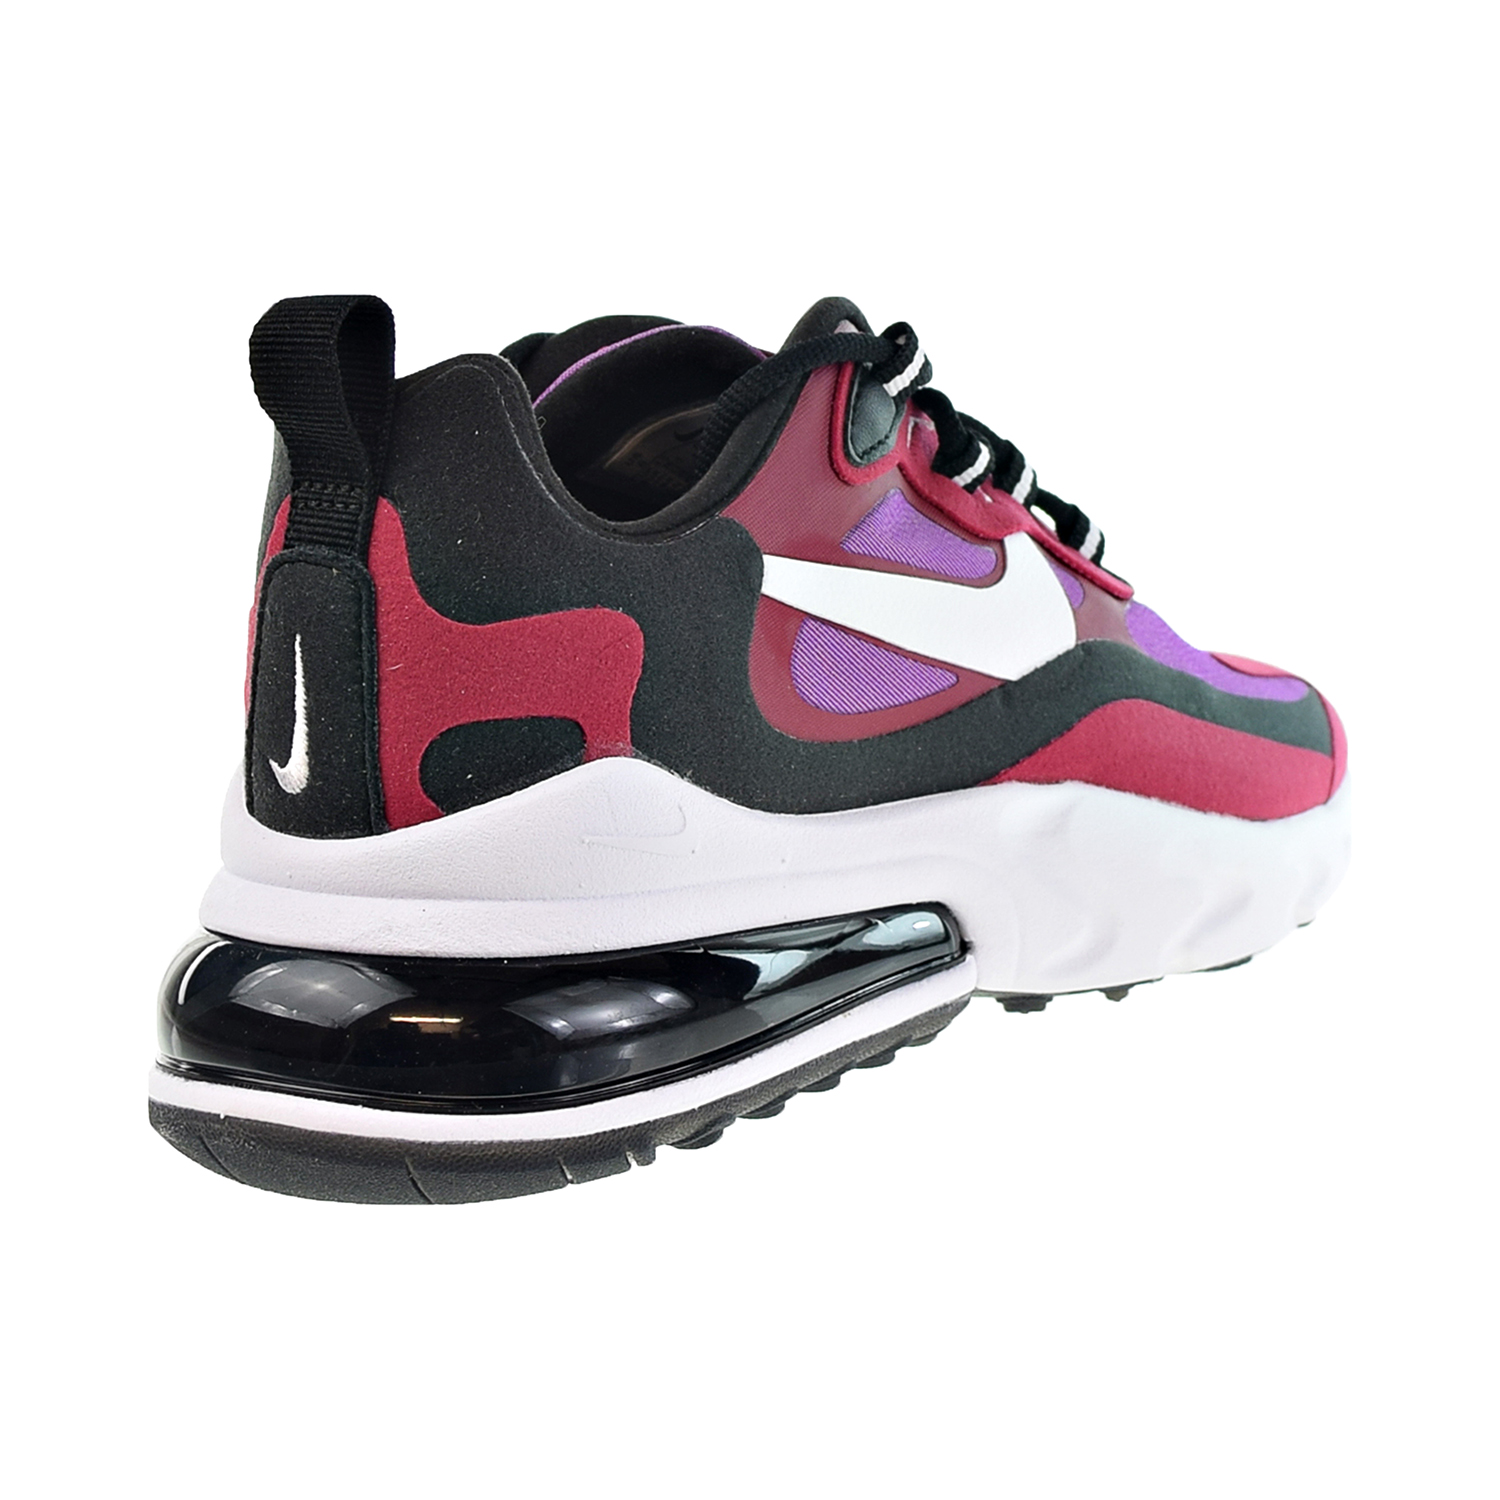 Nike Air Max 270 React Women's Shoes Noble Red-Black-Vivid Purple ci3899-600 - image 3 of 6